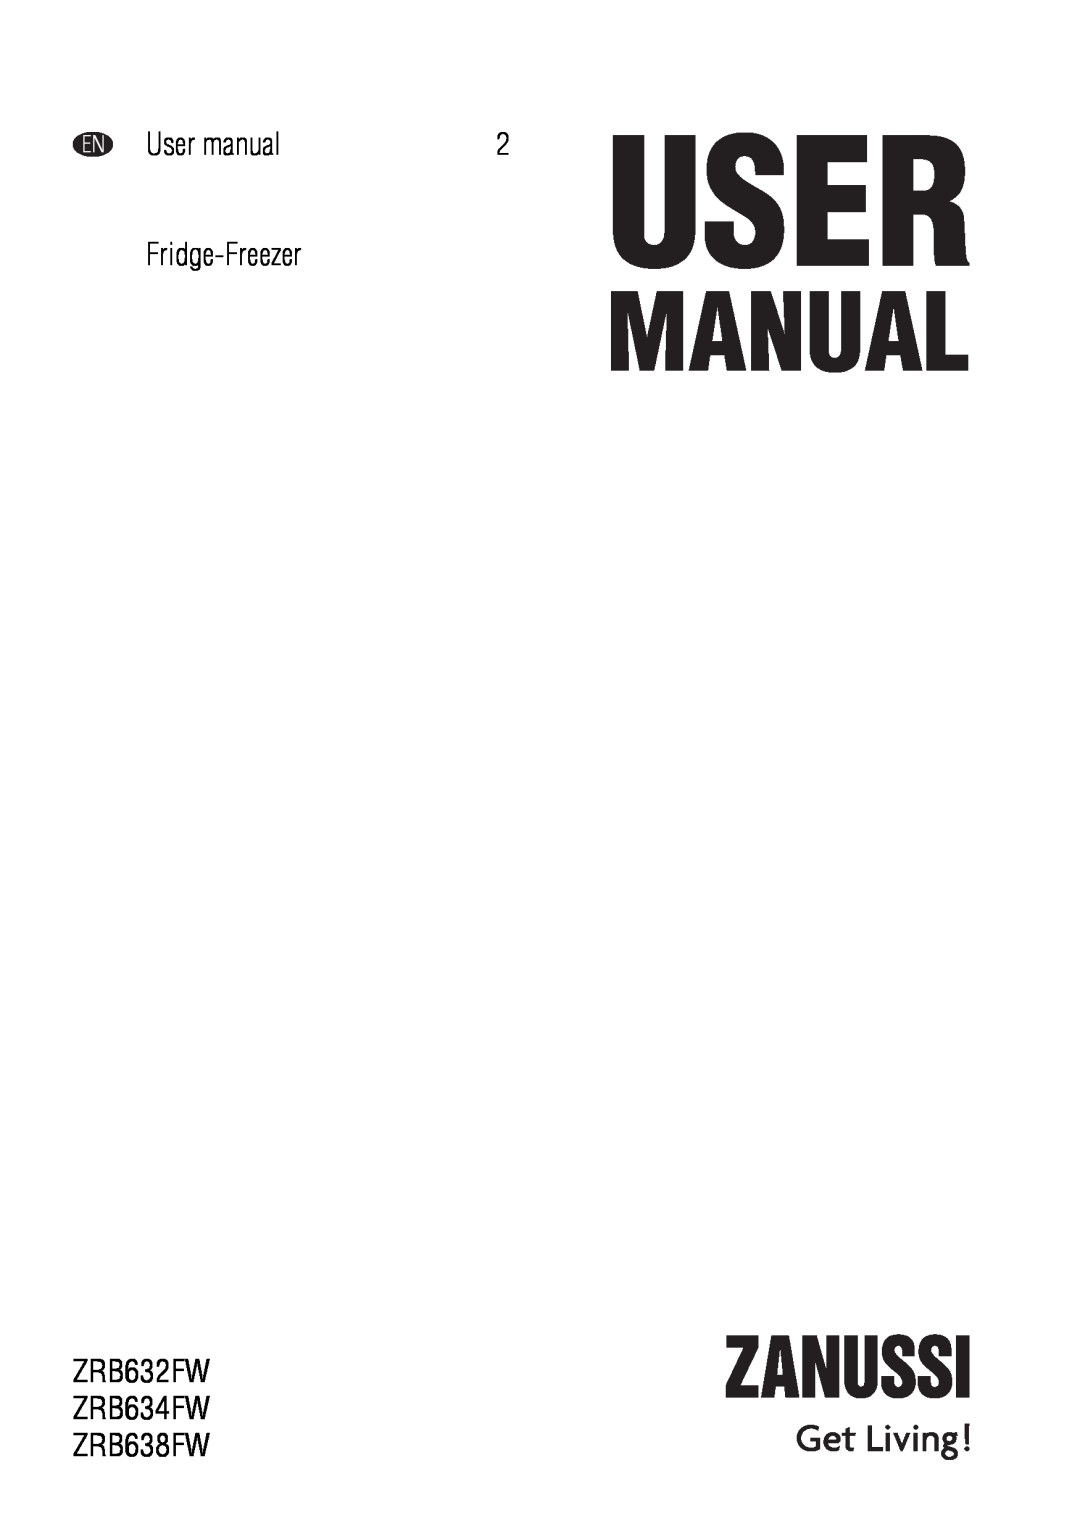 Zanussi user manual Fridge-Freezer, ZRB632FW ZRB634FW ZRB638FW 